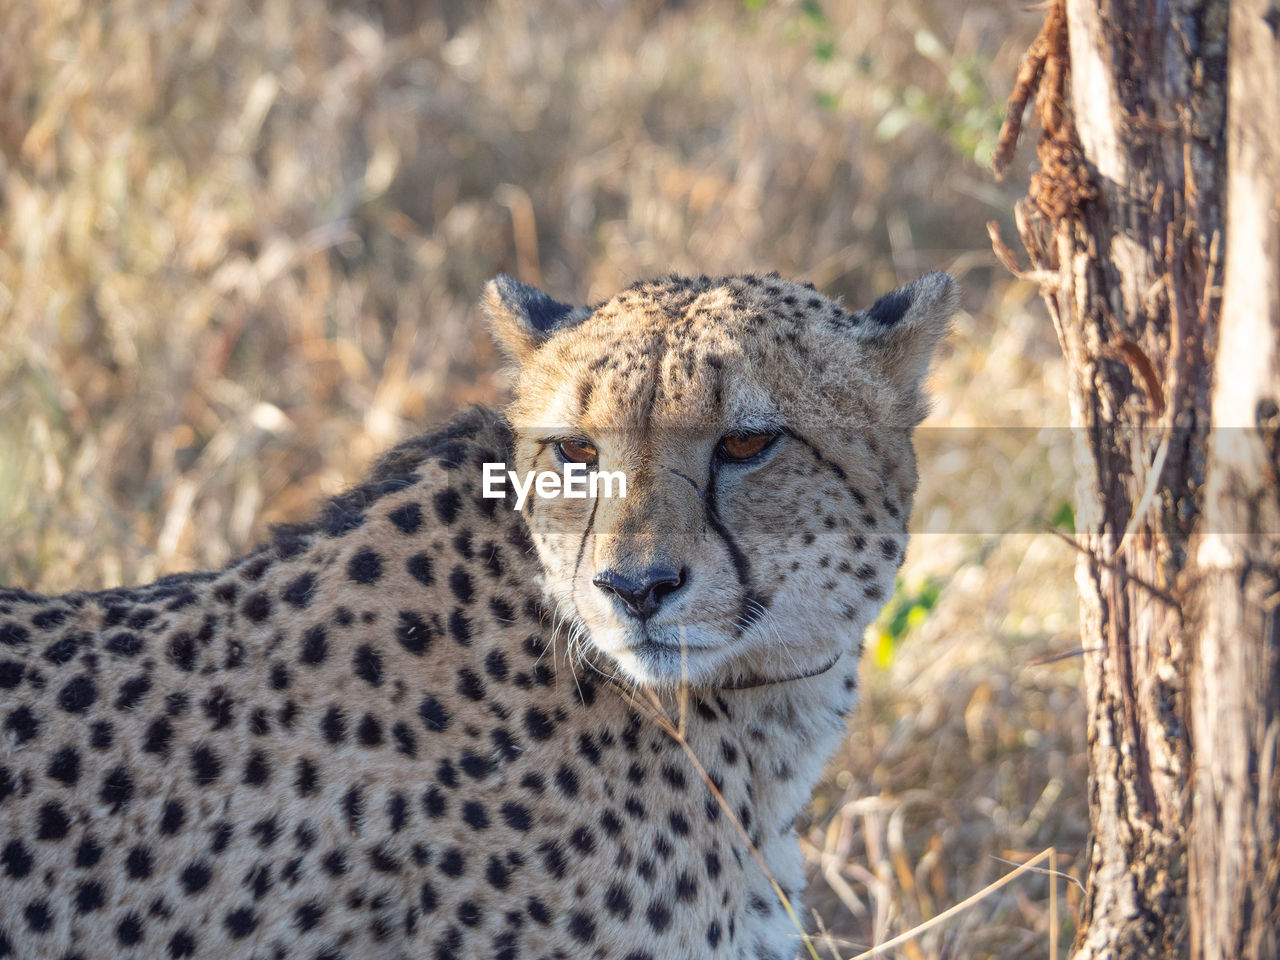 A curious cheetah scanning its environment